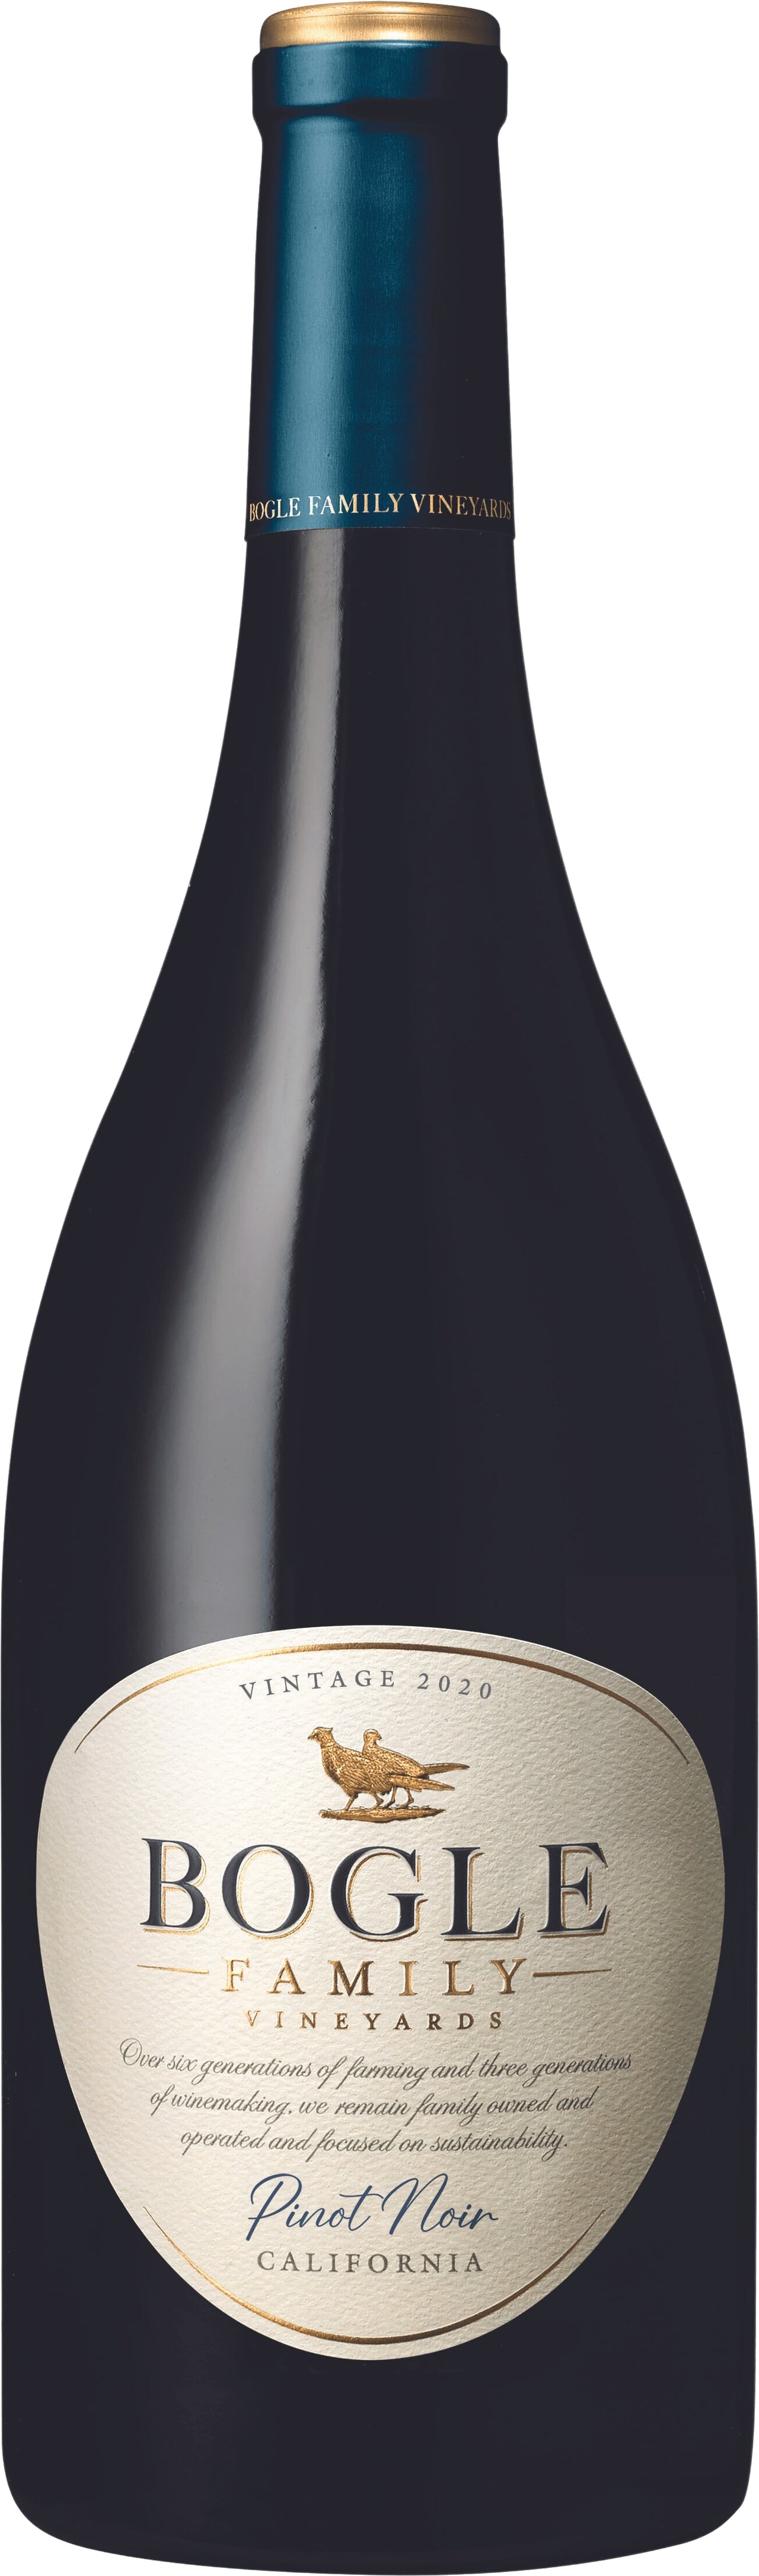 Bogle Family Vineyards Pinot Noir 2021 75cl - Buy Bogle Family Vineyards Wines from GREAT WINES DIRECT wine shop